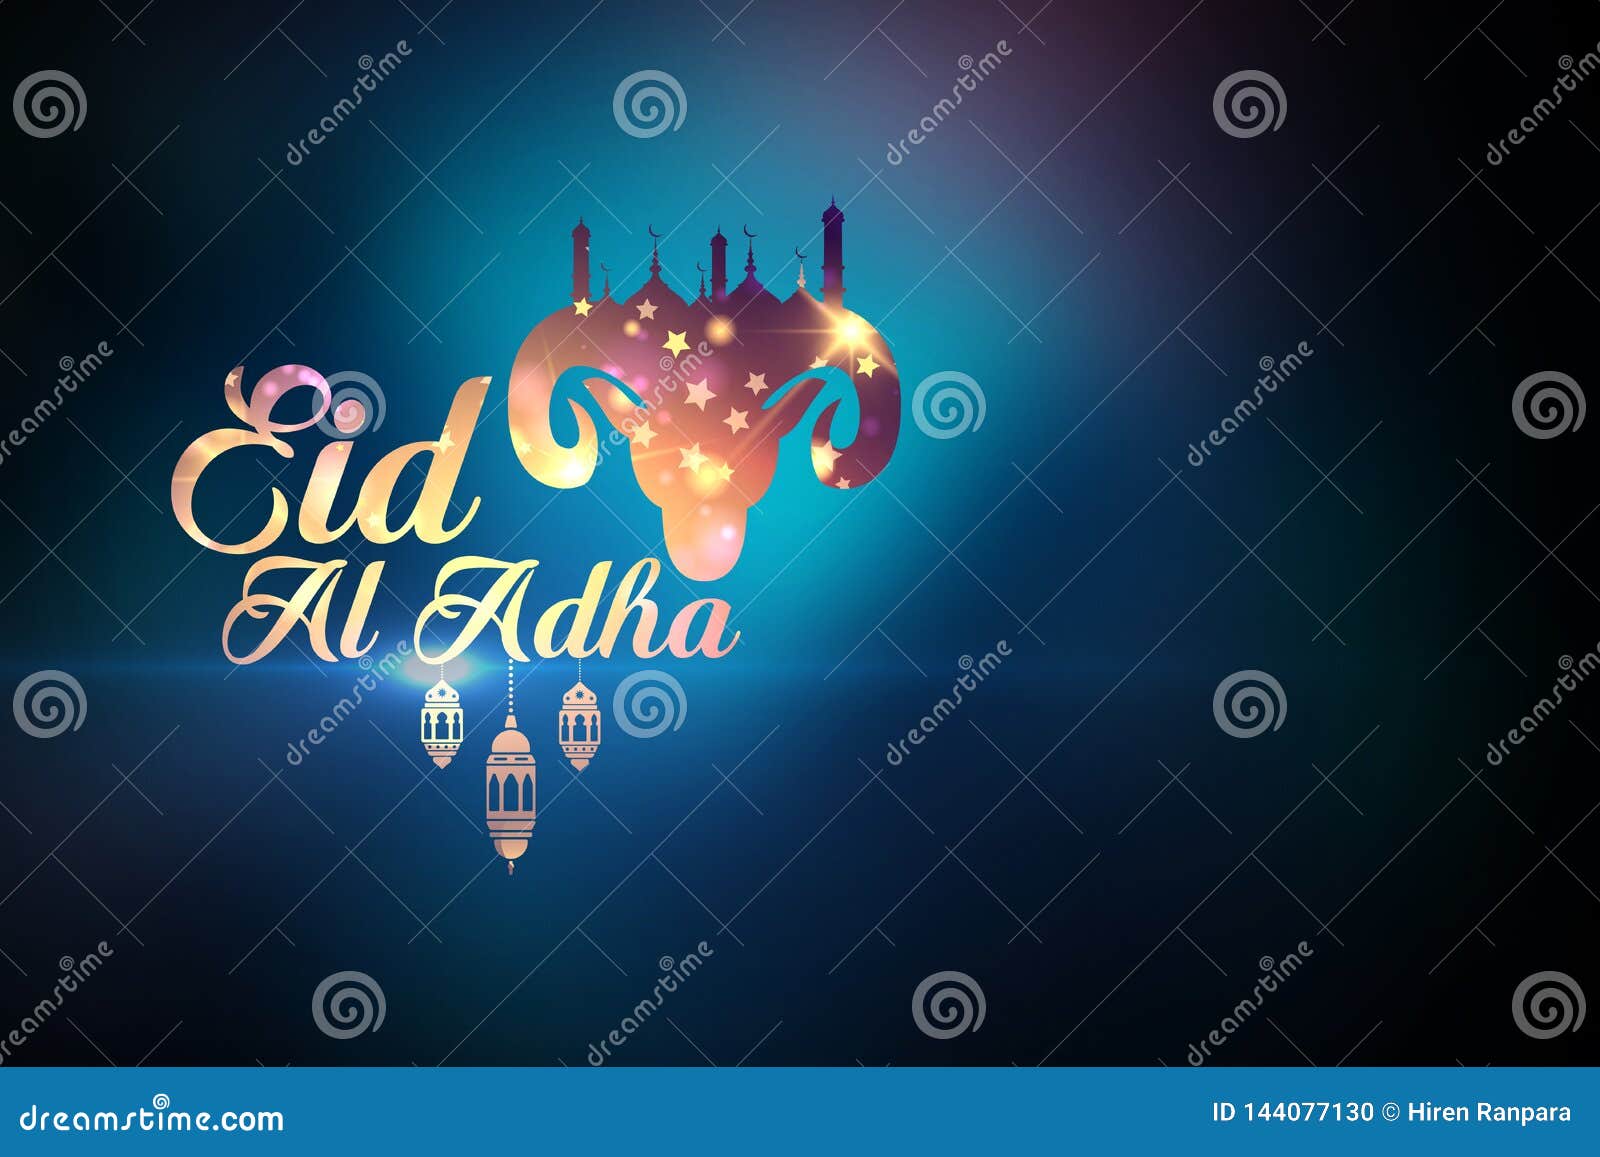 eid al adha greetings illustrating moaque on sheep head